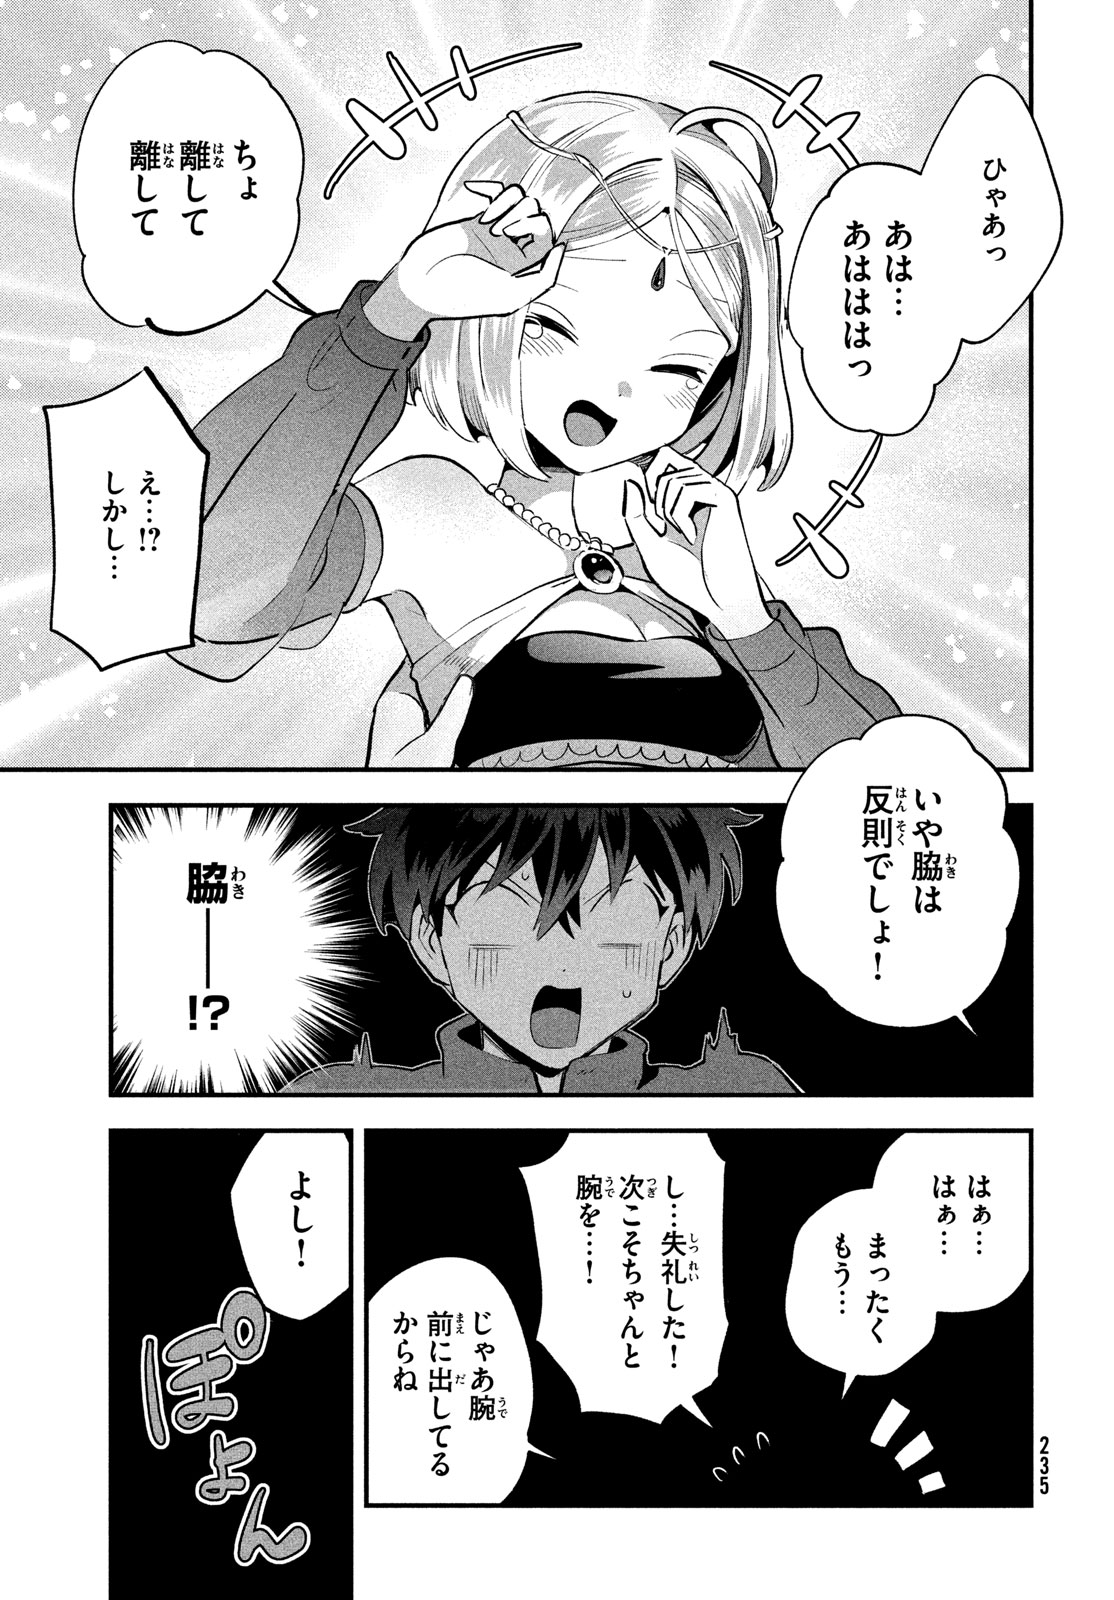 7-nin no Nemuri Hime - Chapter 37 - Page 3